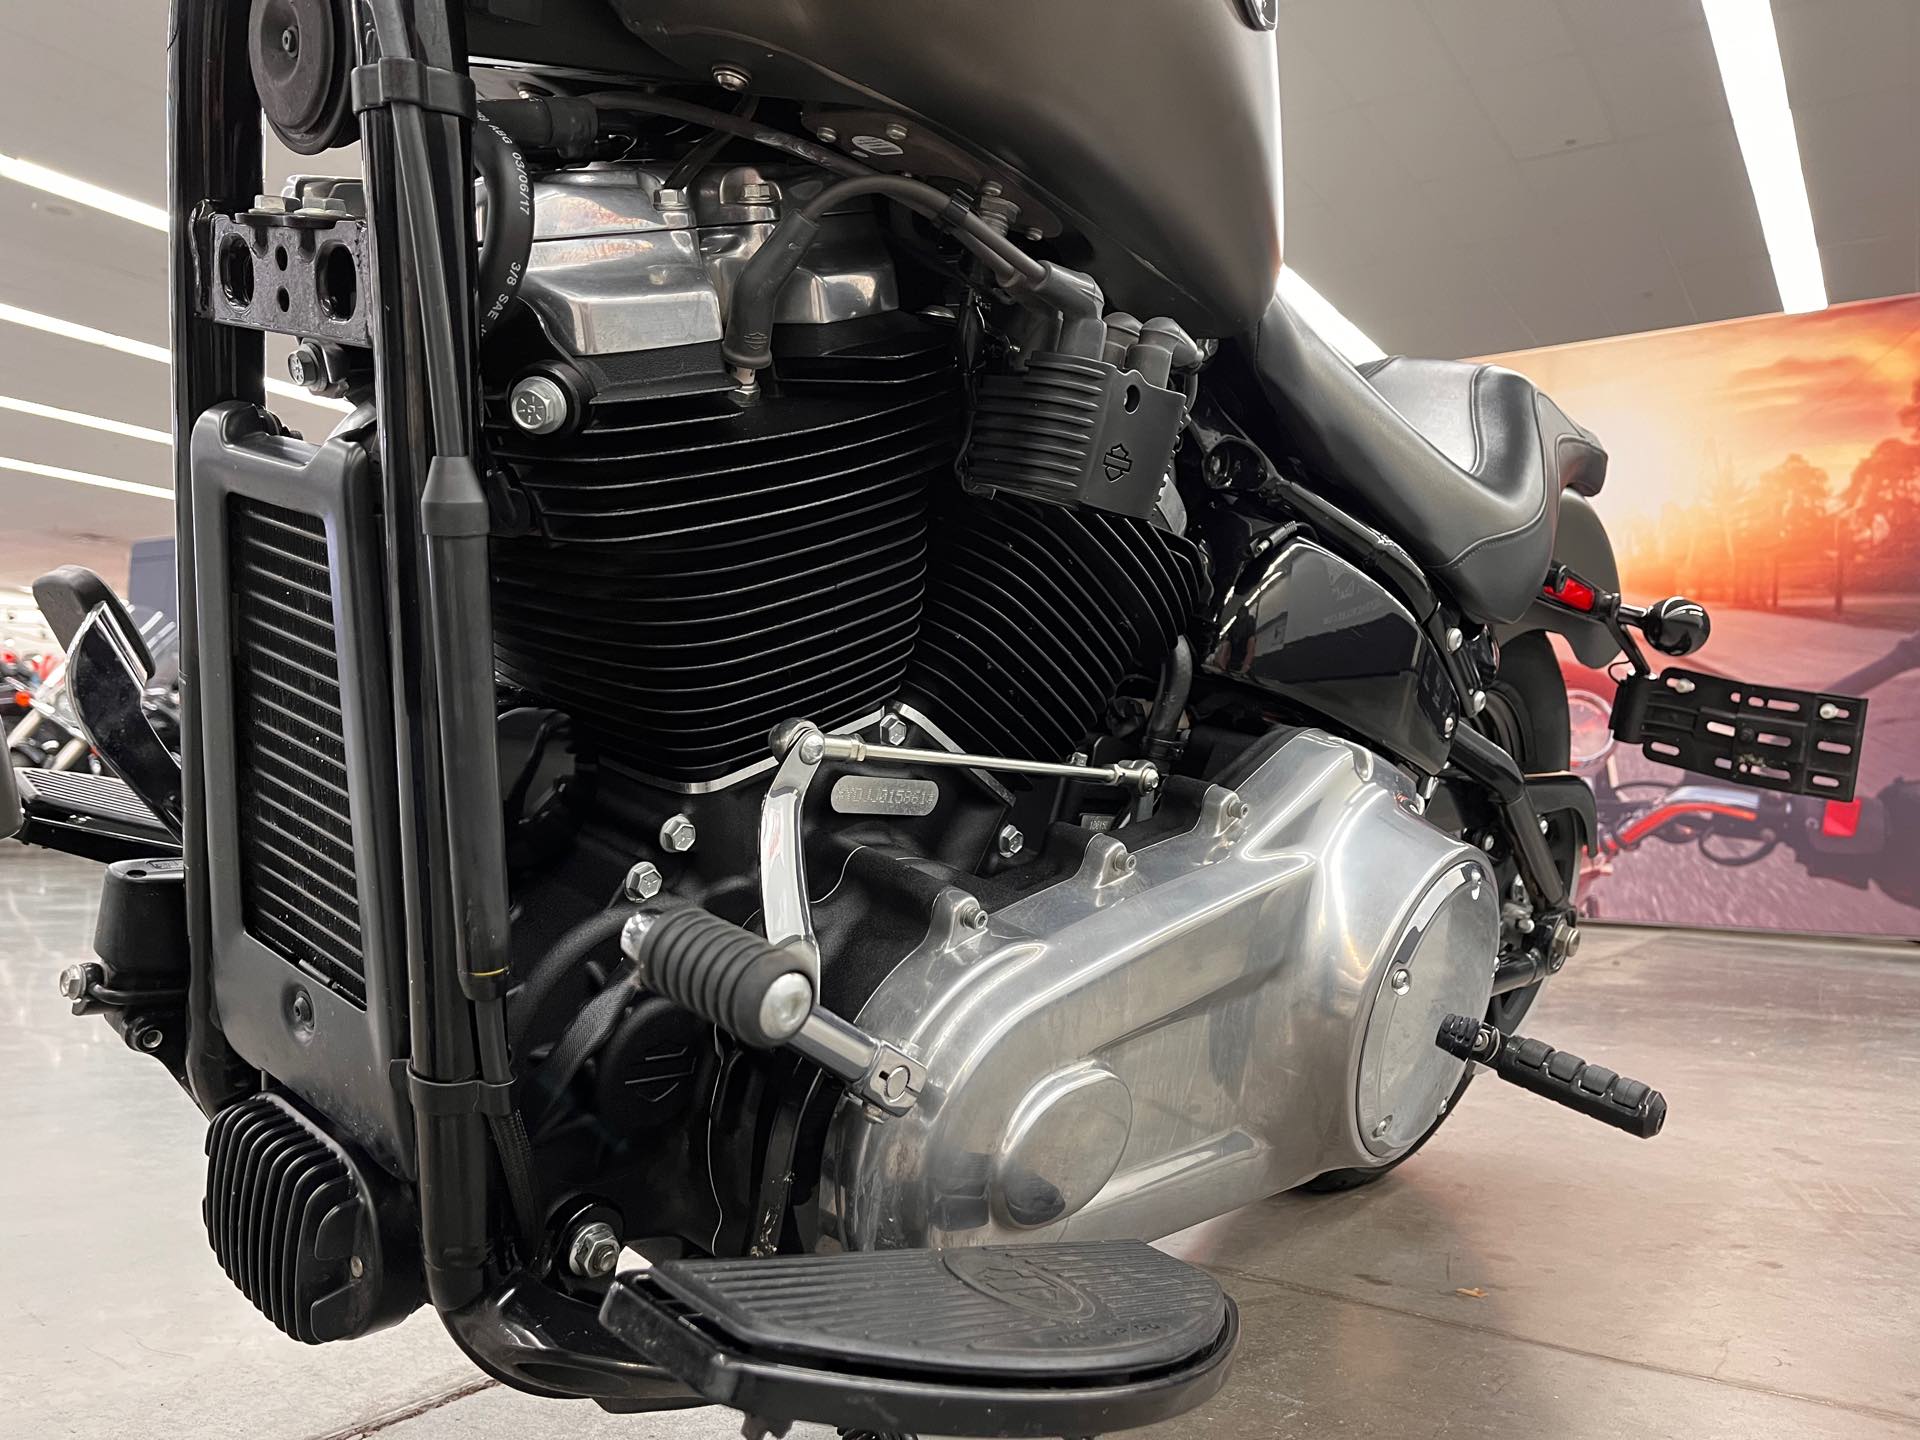 2018 Harley-Davidson Softail Slim at Aces Motorcycles - Denver